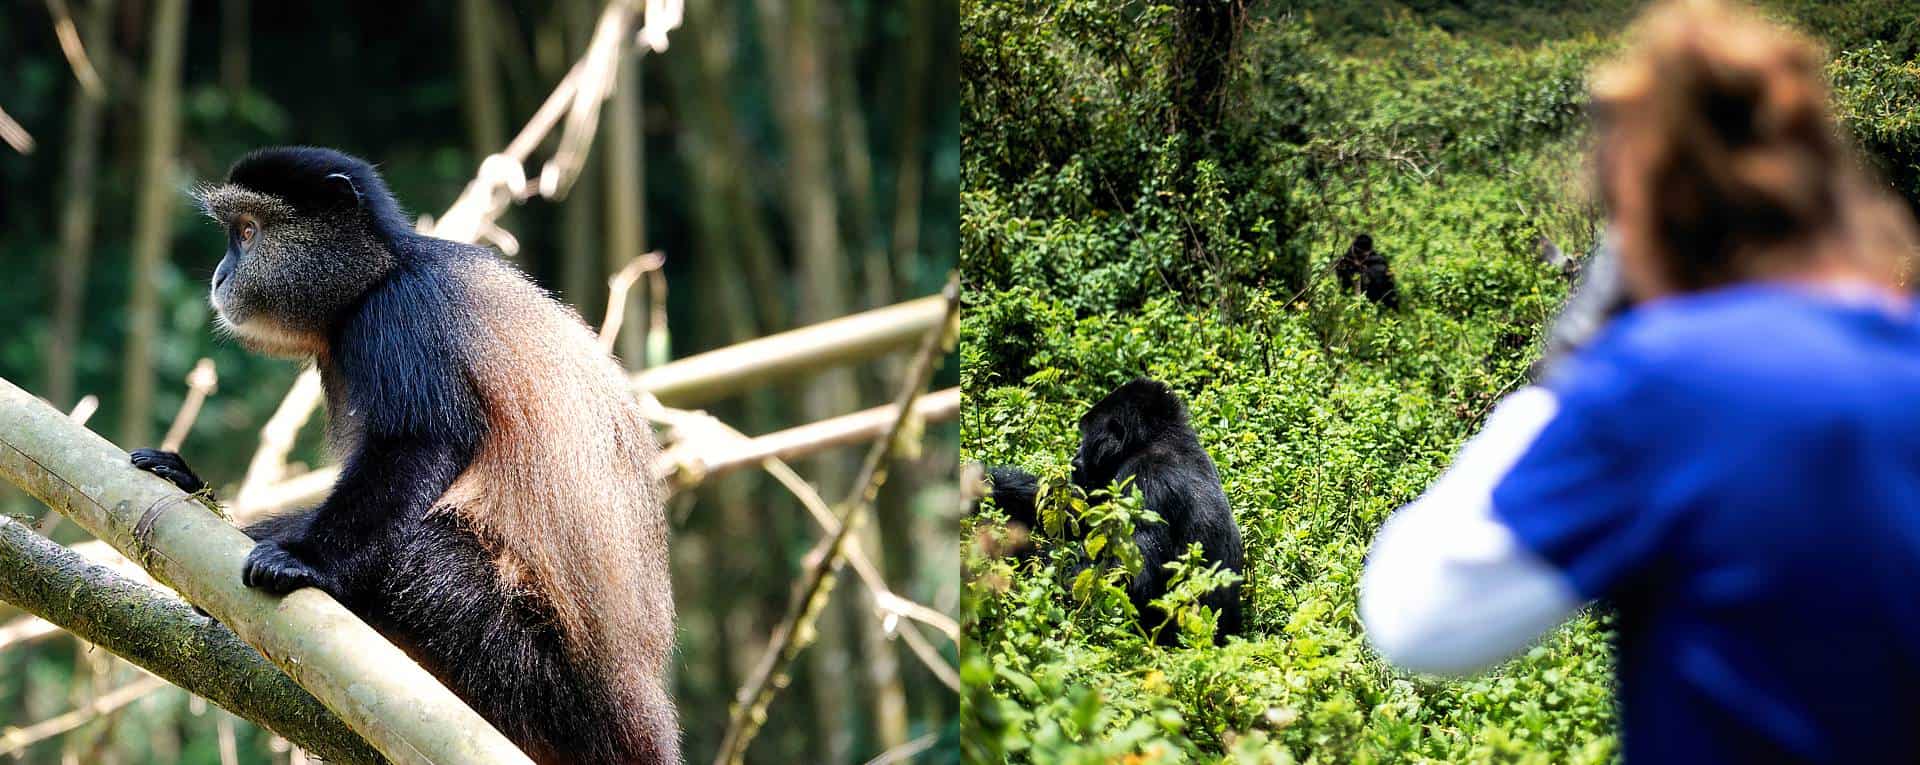 Mgahinga Gorilla Safari Activities & Tour Attractions